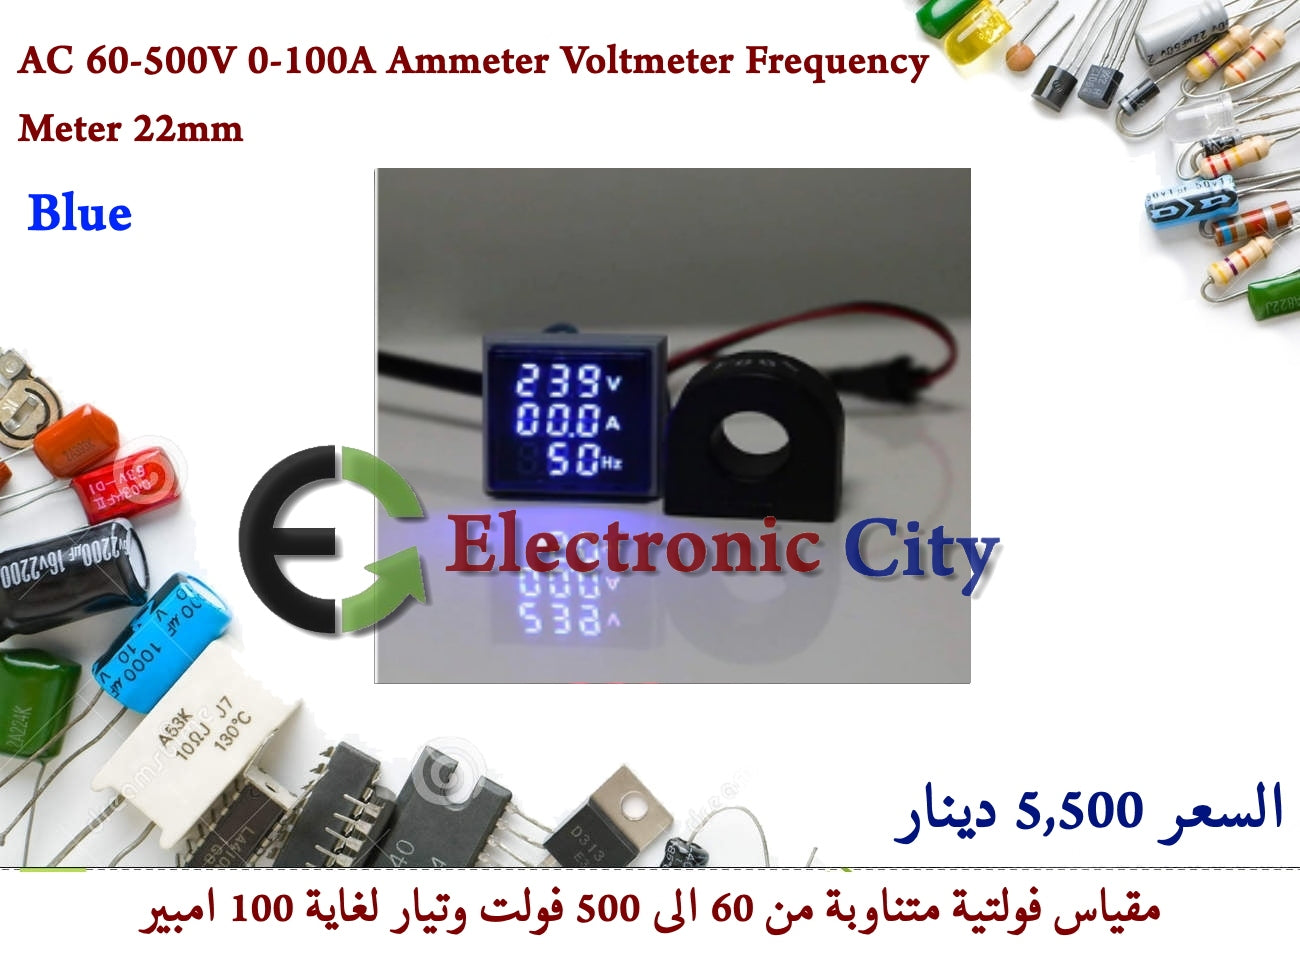 AC 60-500V 0-100A Ammeter Voltmeter Frequency Meter 22mm Blue #E 1